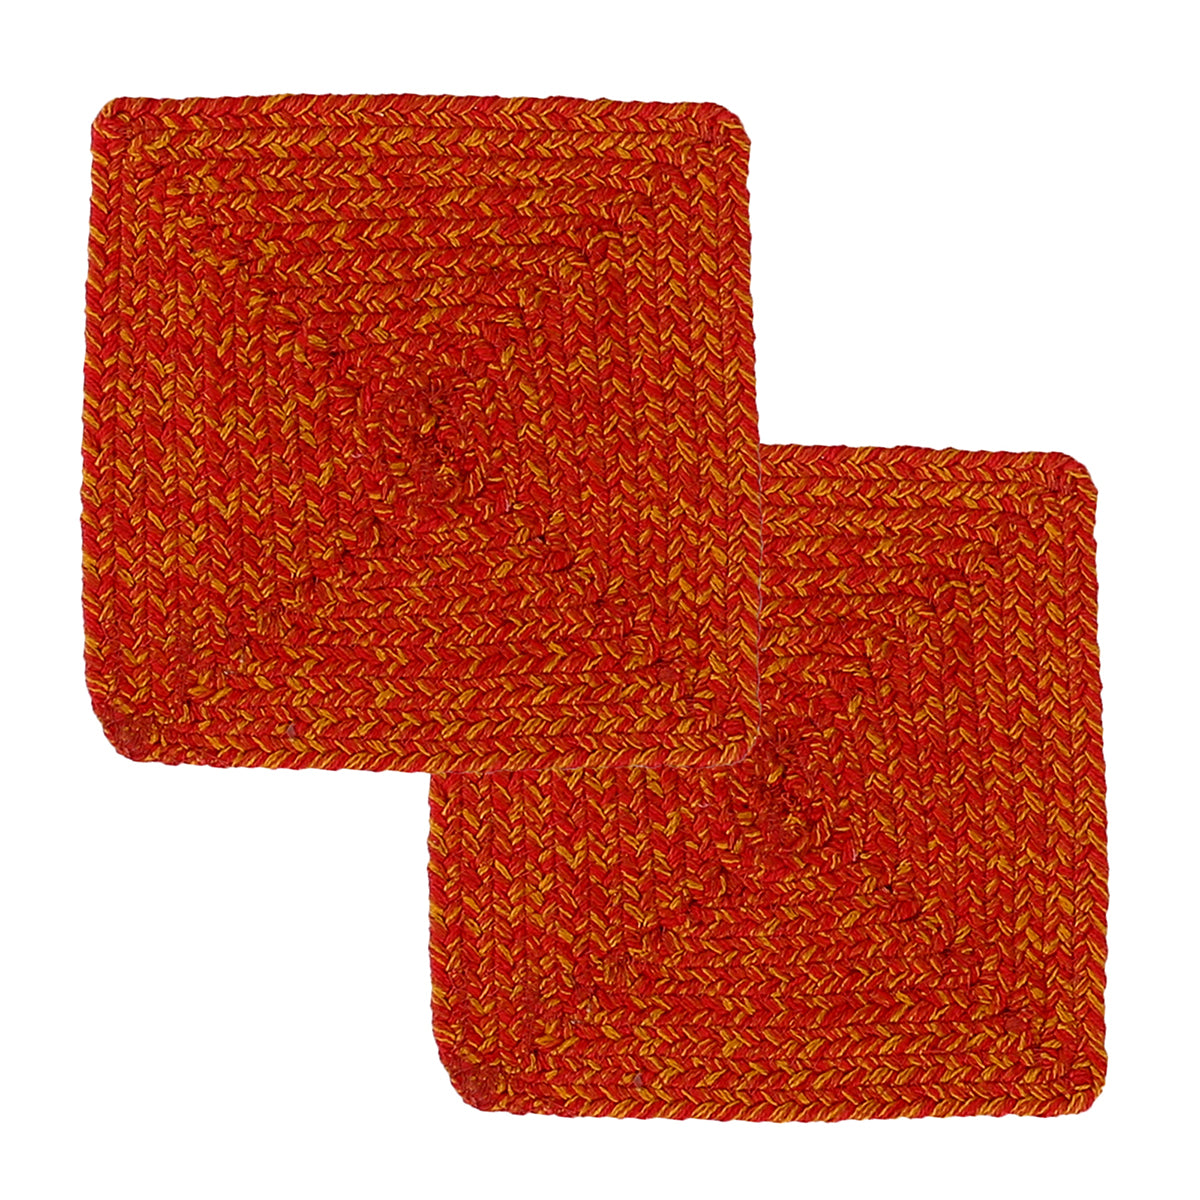 Braided Square Hand Made 100% Cotton Orange 2PC Hot Pad Set